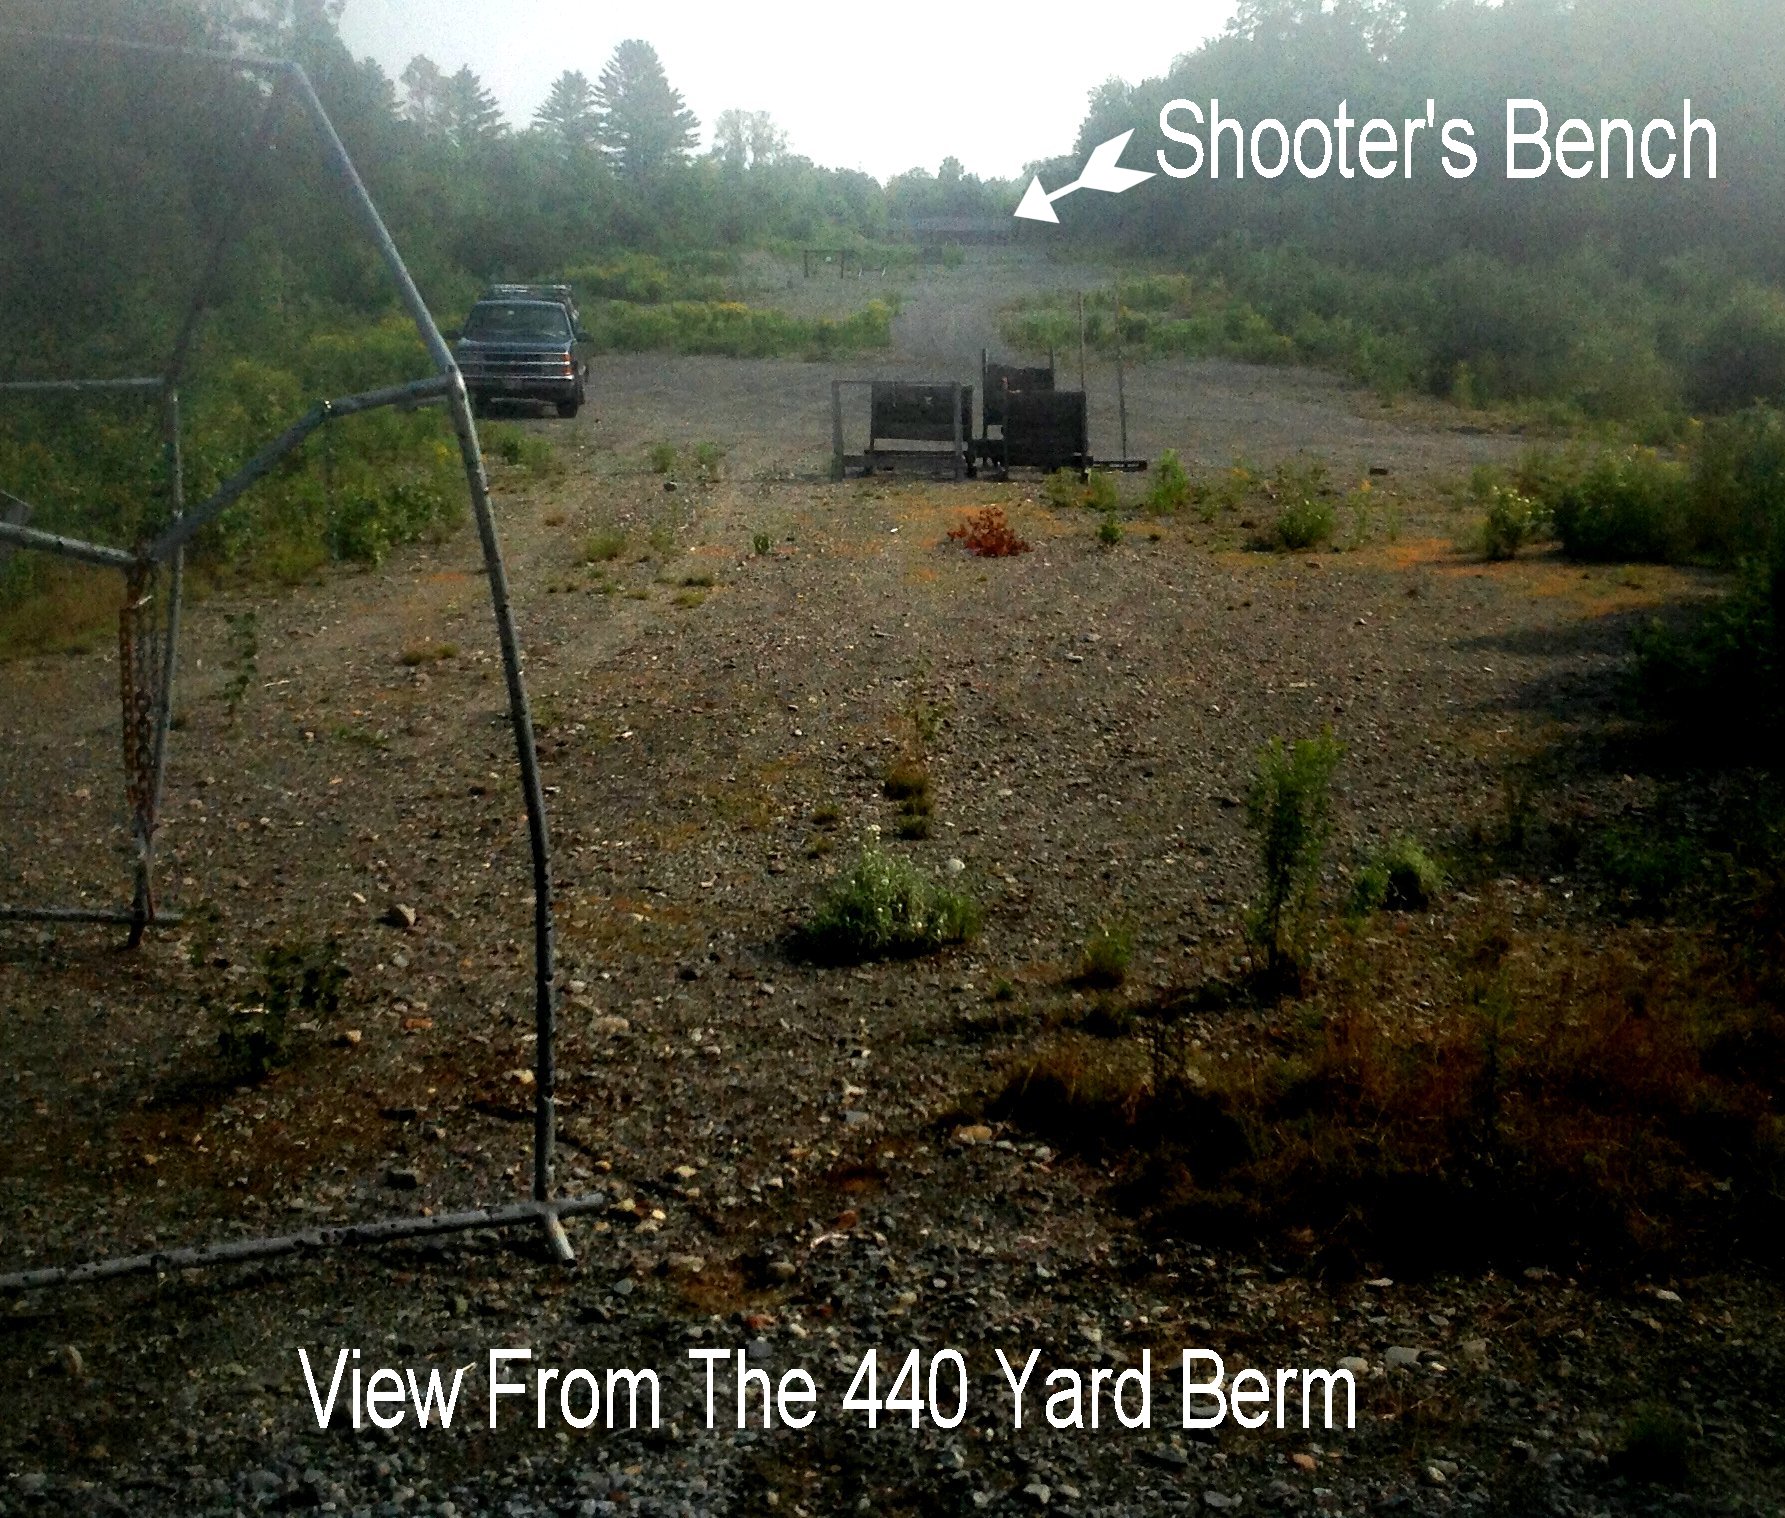 400 Yard Range from 440 Yard Mark Looking Back at Shooter's Bench